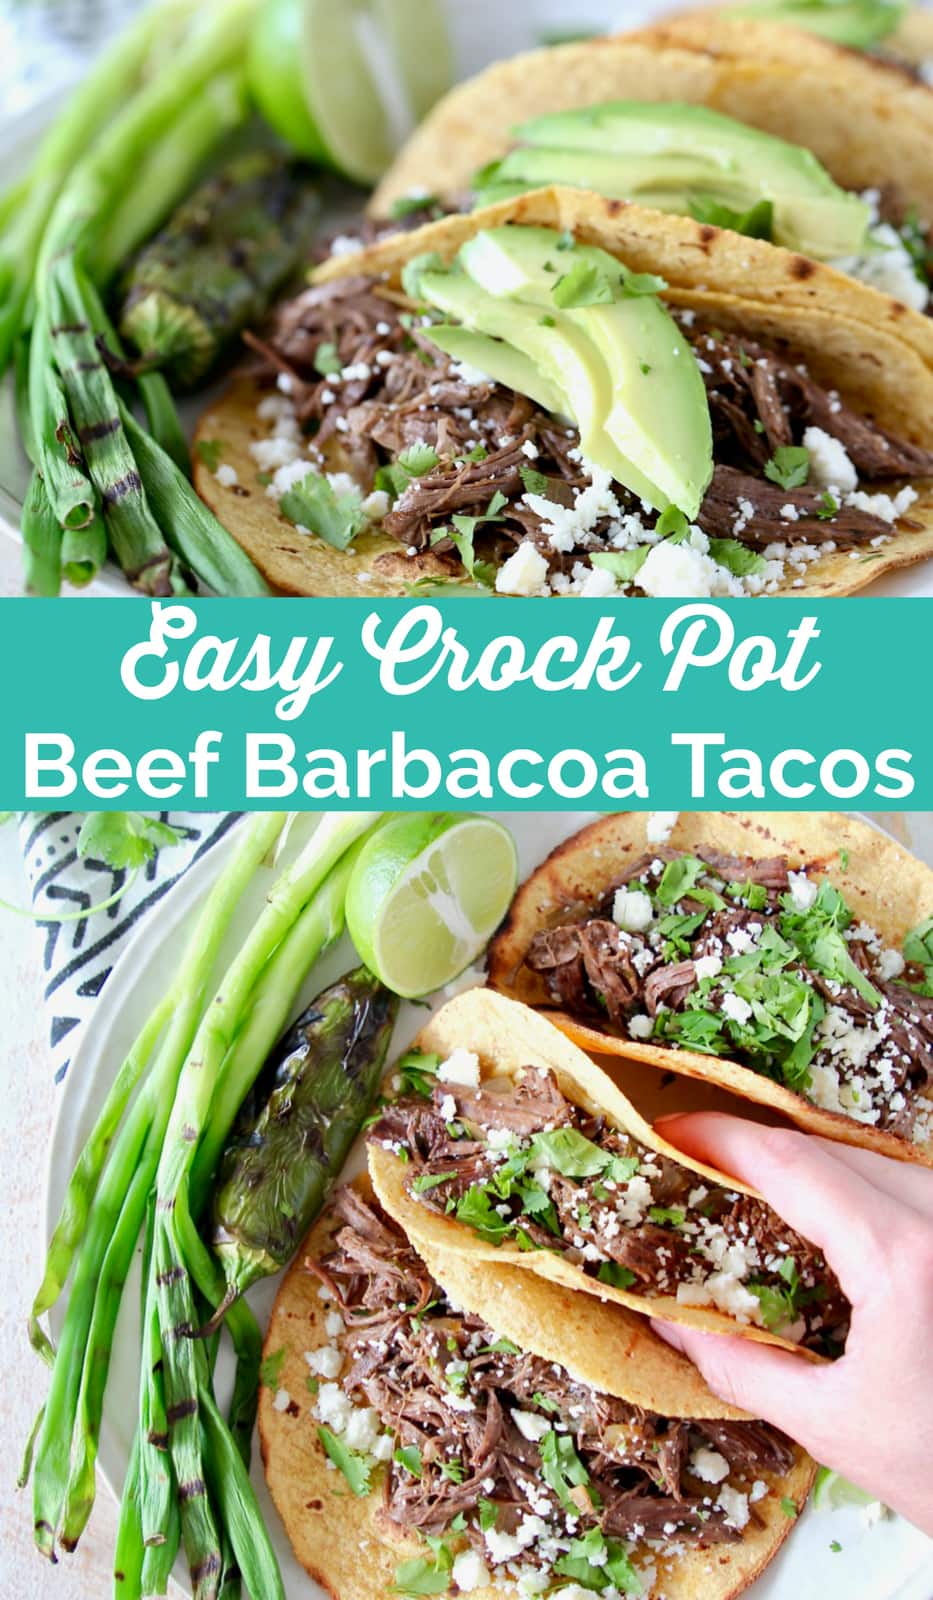 Easy Crock Pot Beef Barbacoa Recipe - WhitneyBond.com